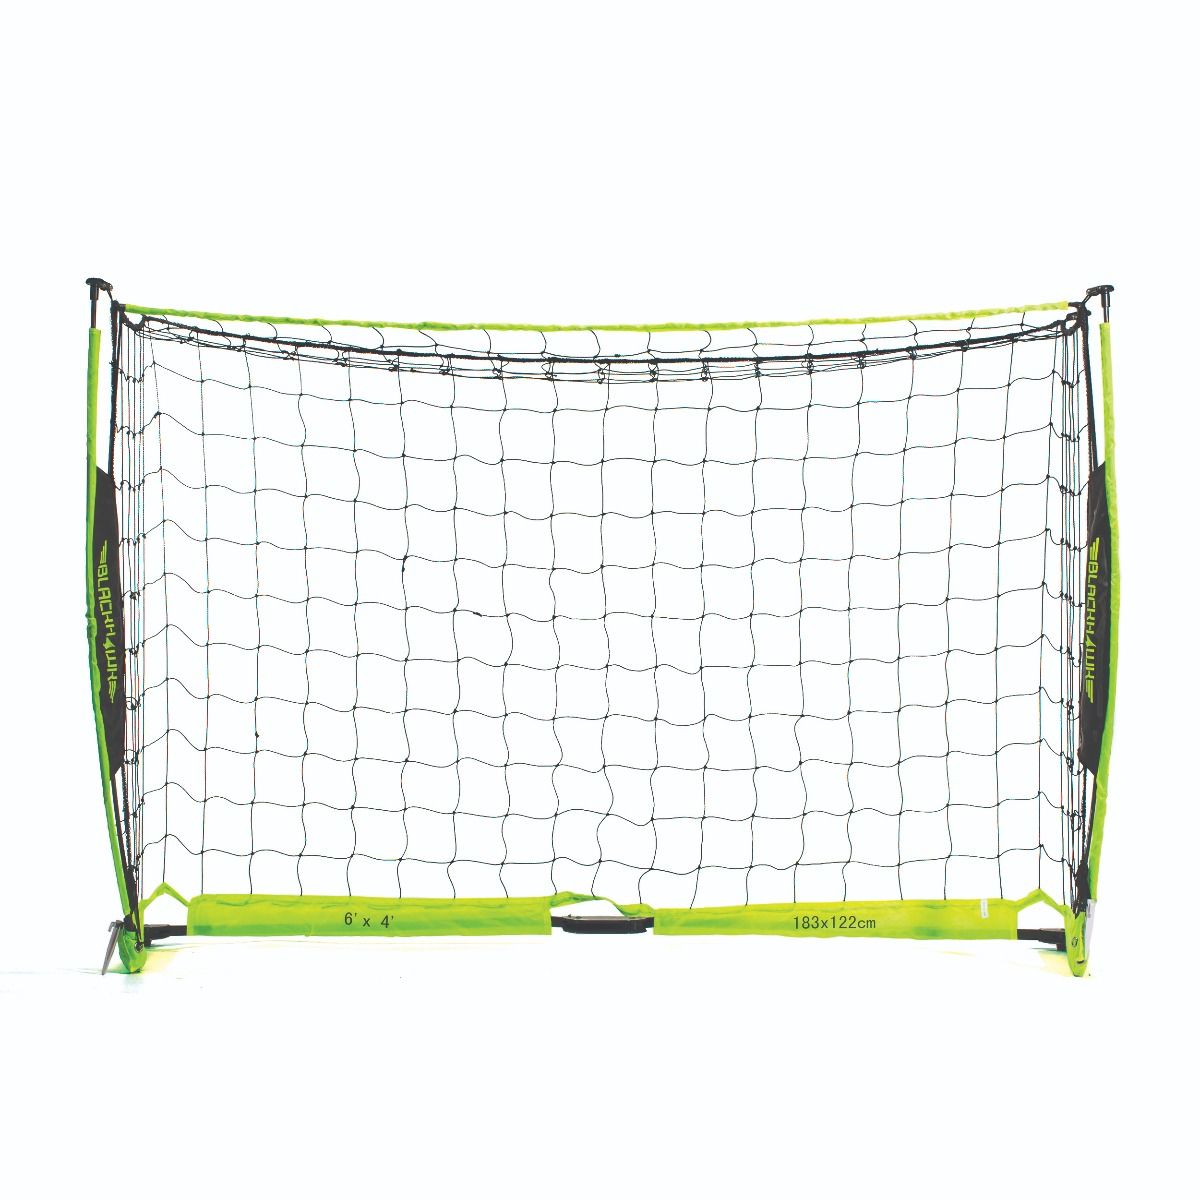 Franklin 6' x 4' Blackhawk Flexpro Portable Soccer Goal Equipment FRANKLIN SPORTS INC.   